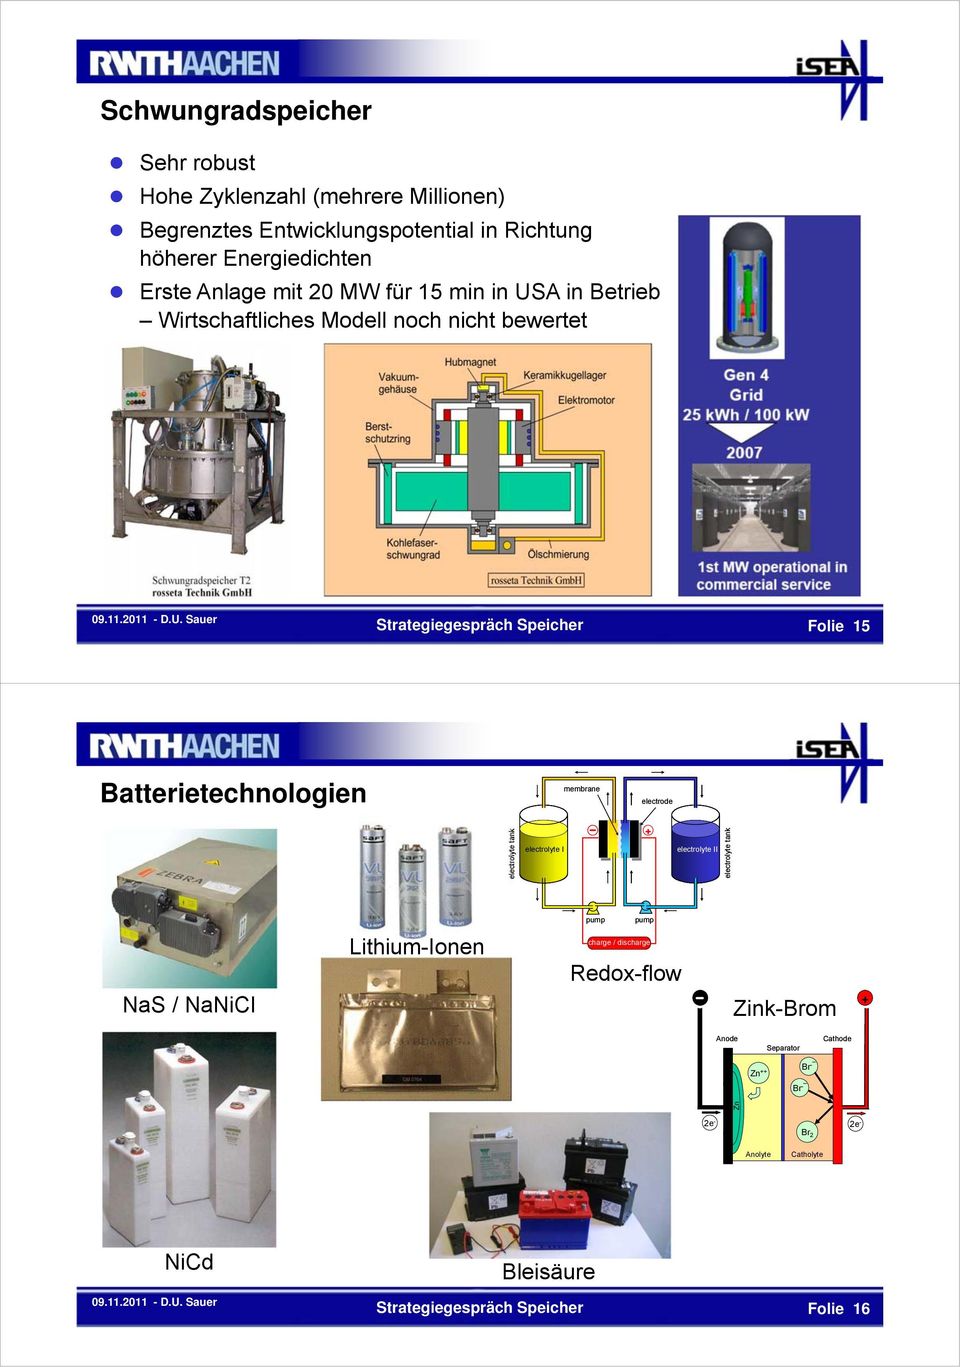 Batterietechnologien membrane electrode electrolyte tank electrolyte I electrolyte II pump pump NaS / NaNiCl - Zink-Brom + Anode